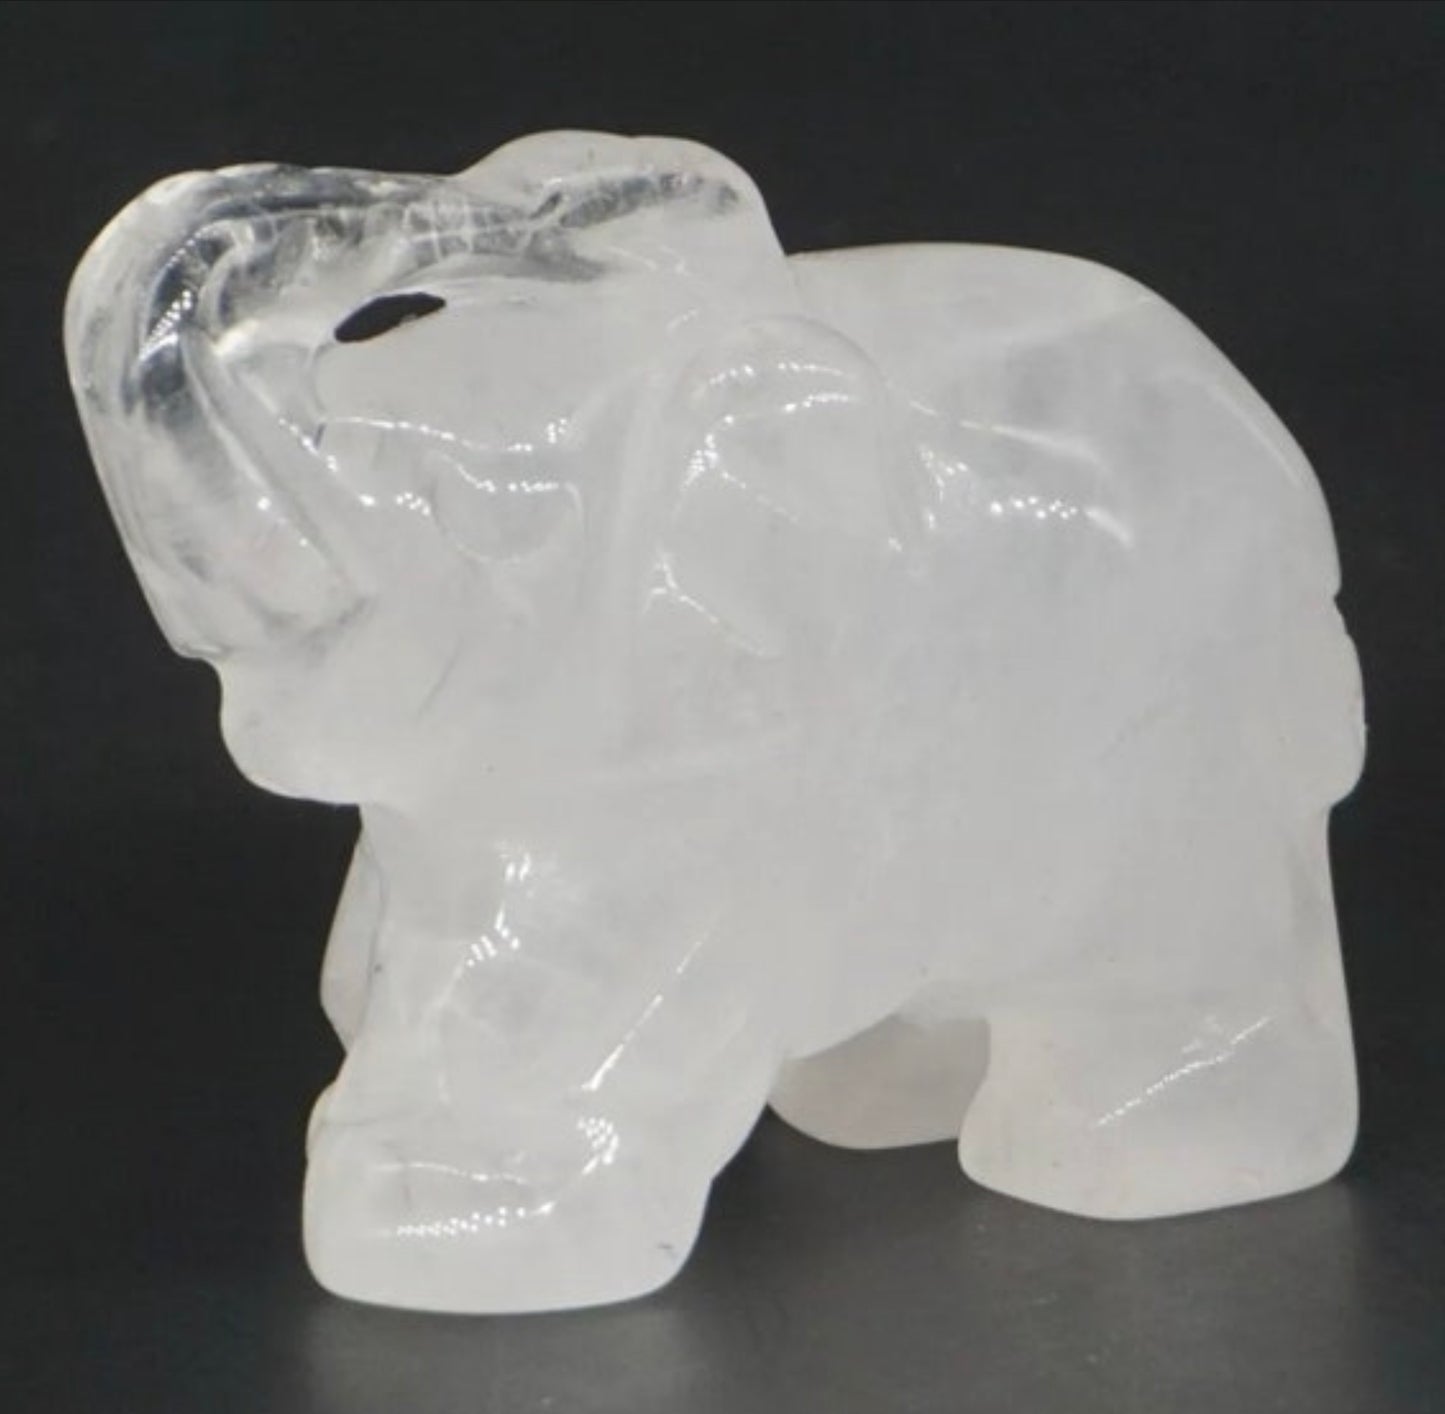 Gemstone Carved Elephants